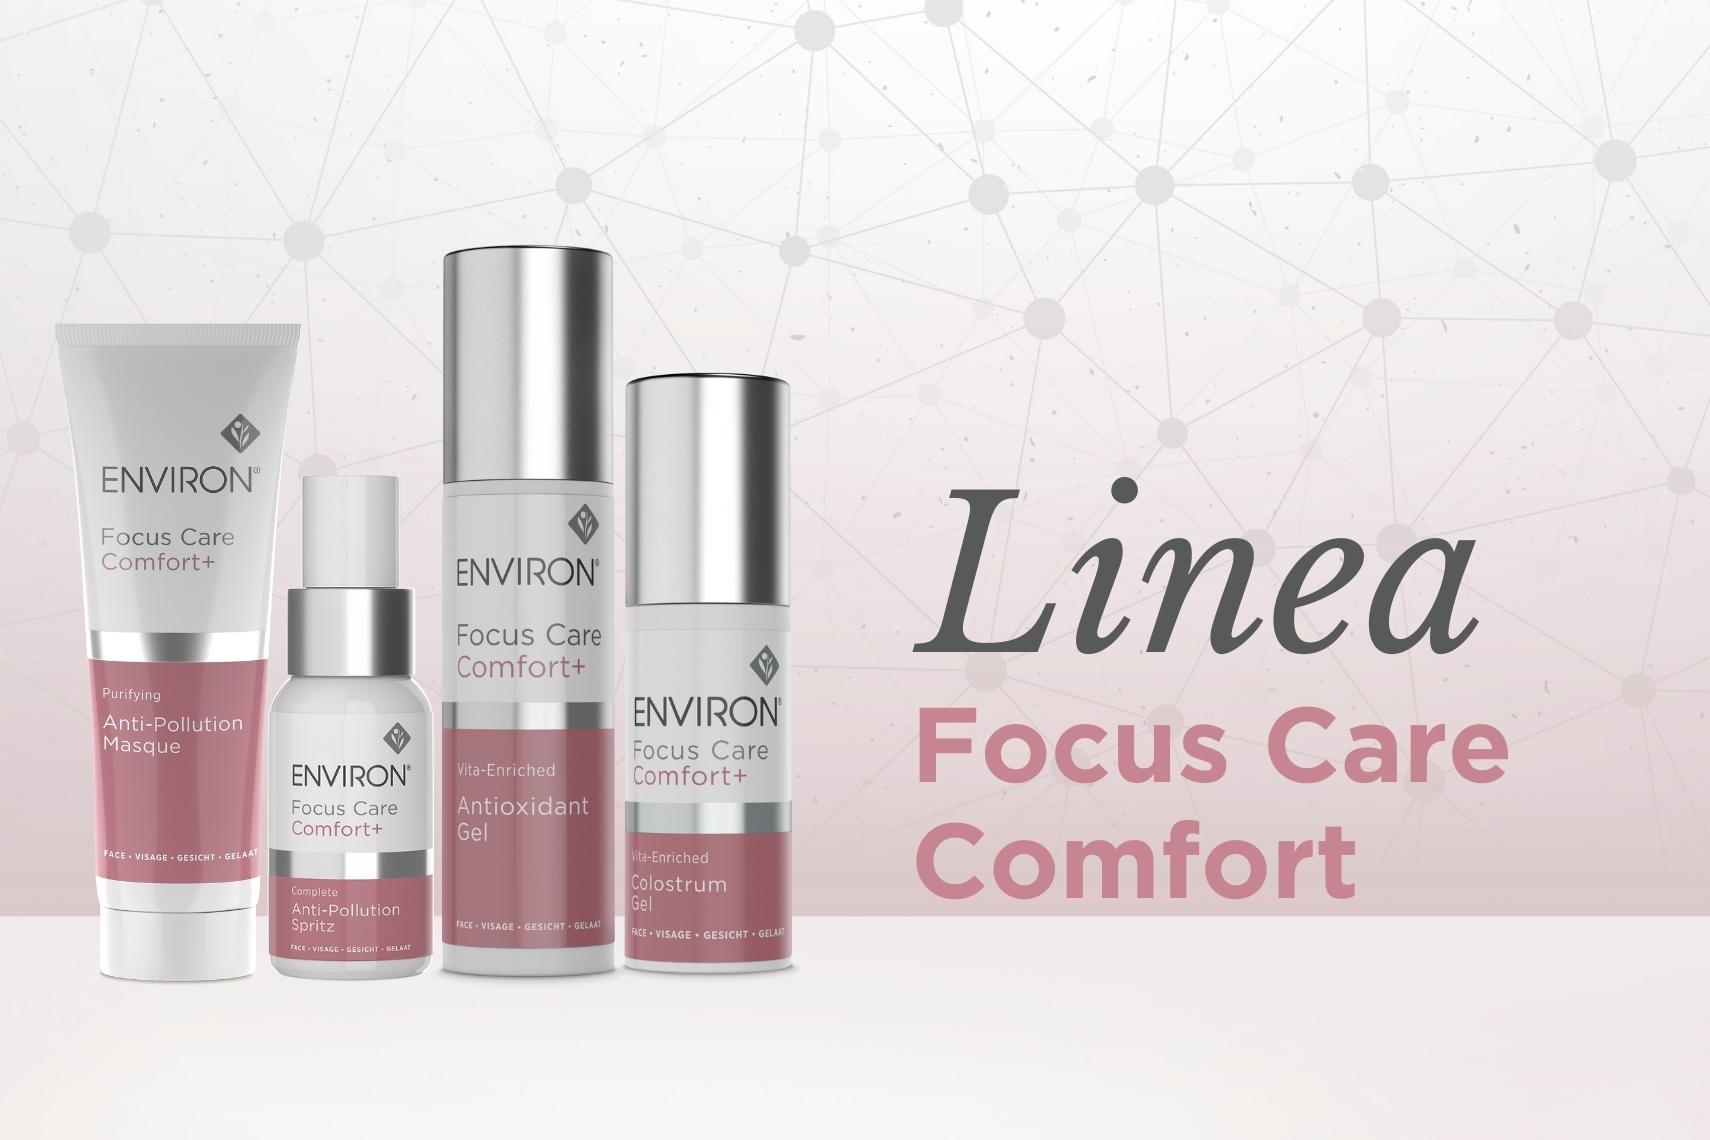 Environ Focus Care Comfort+ img